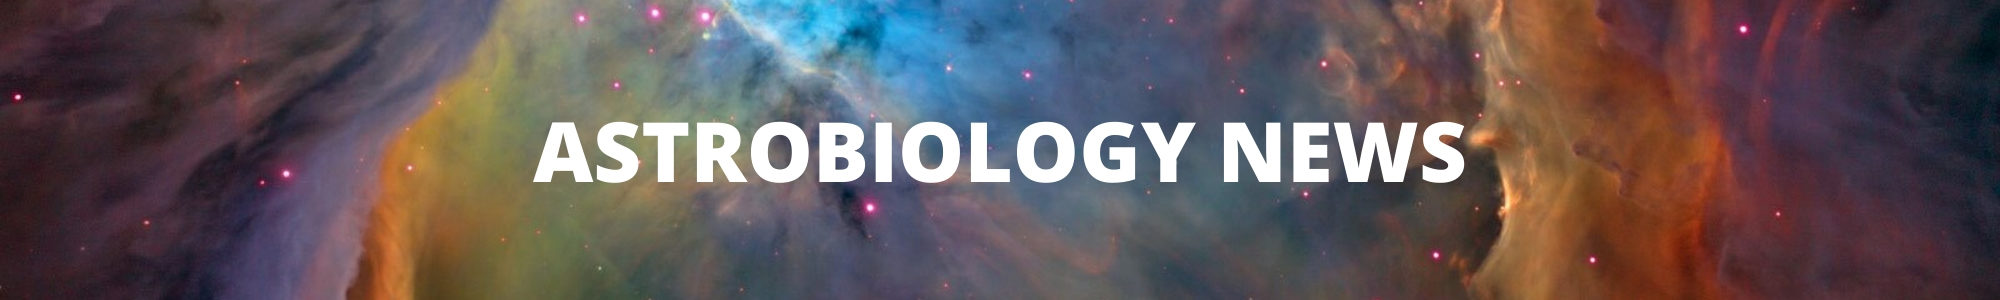 Astrobiology News